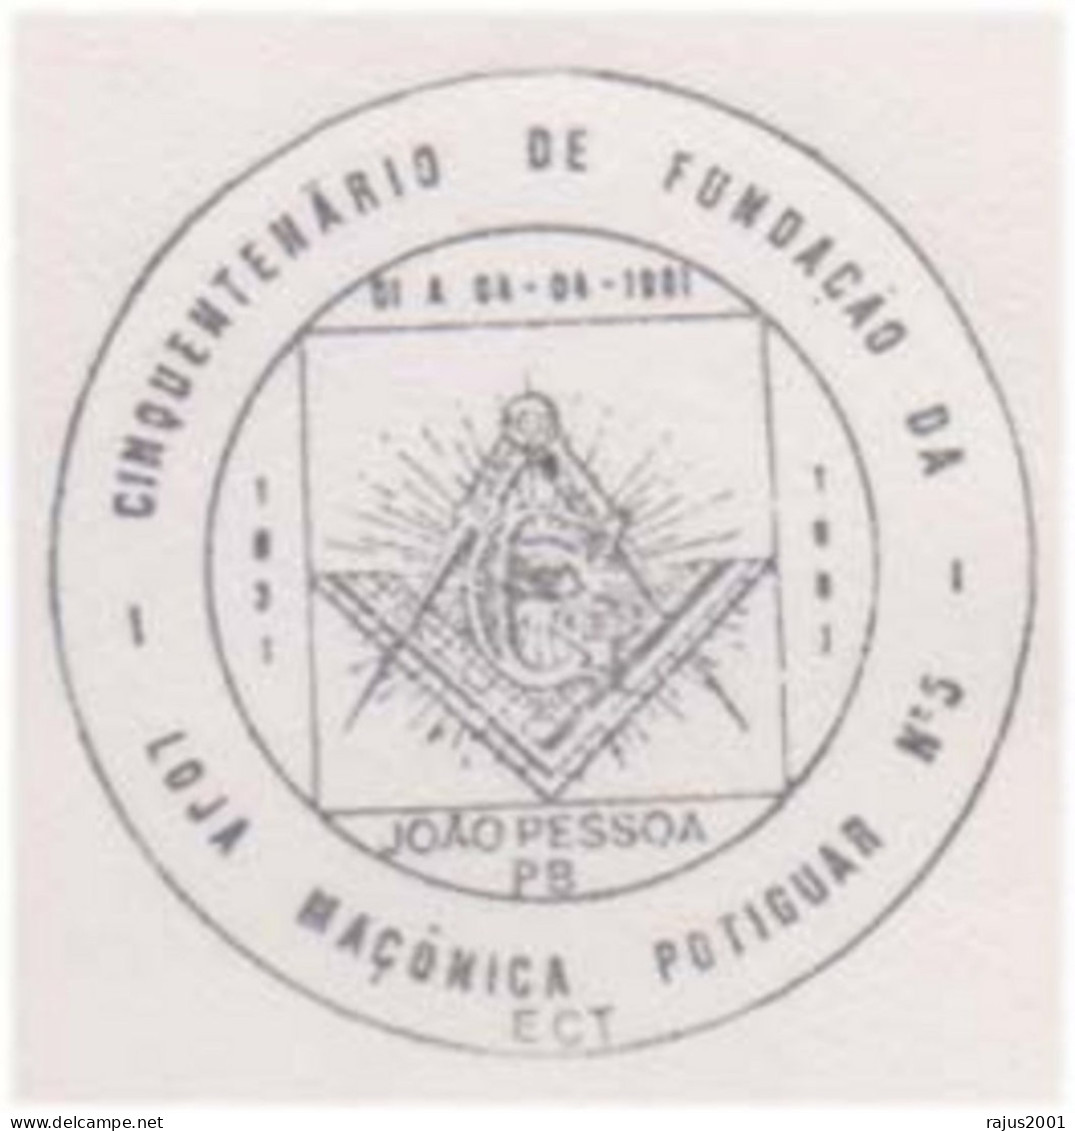 FOUNDATION OF THE POTIGUAR MASONIC STORE NO. 5, True Masonic, Mason, Freemasonry, Brazil Cover FDC 1981 - Vrijmetselarij